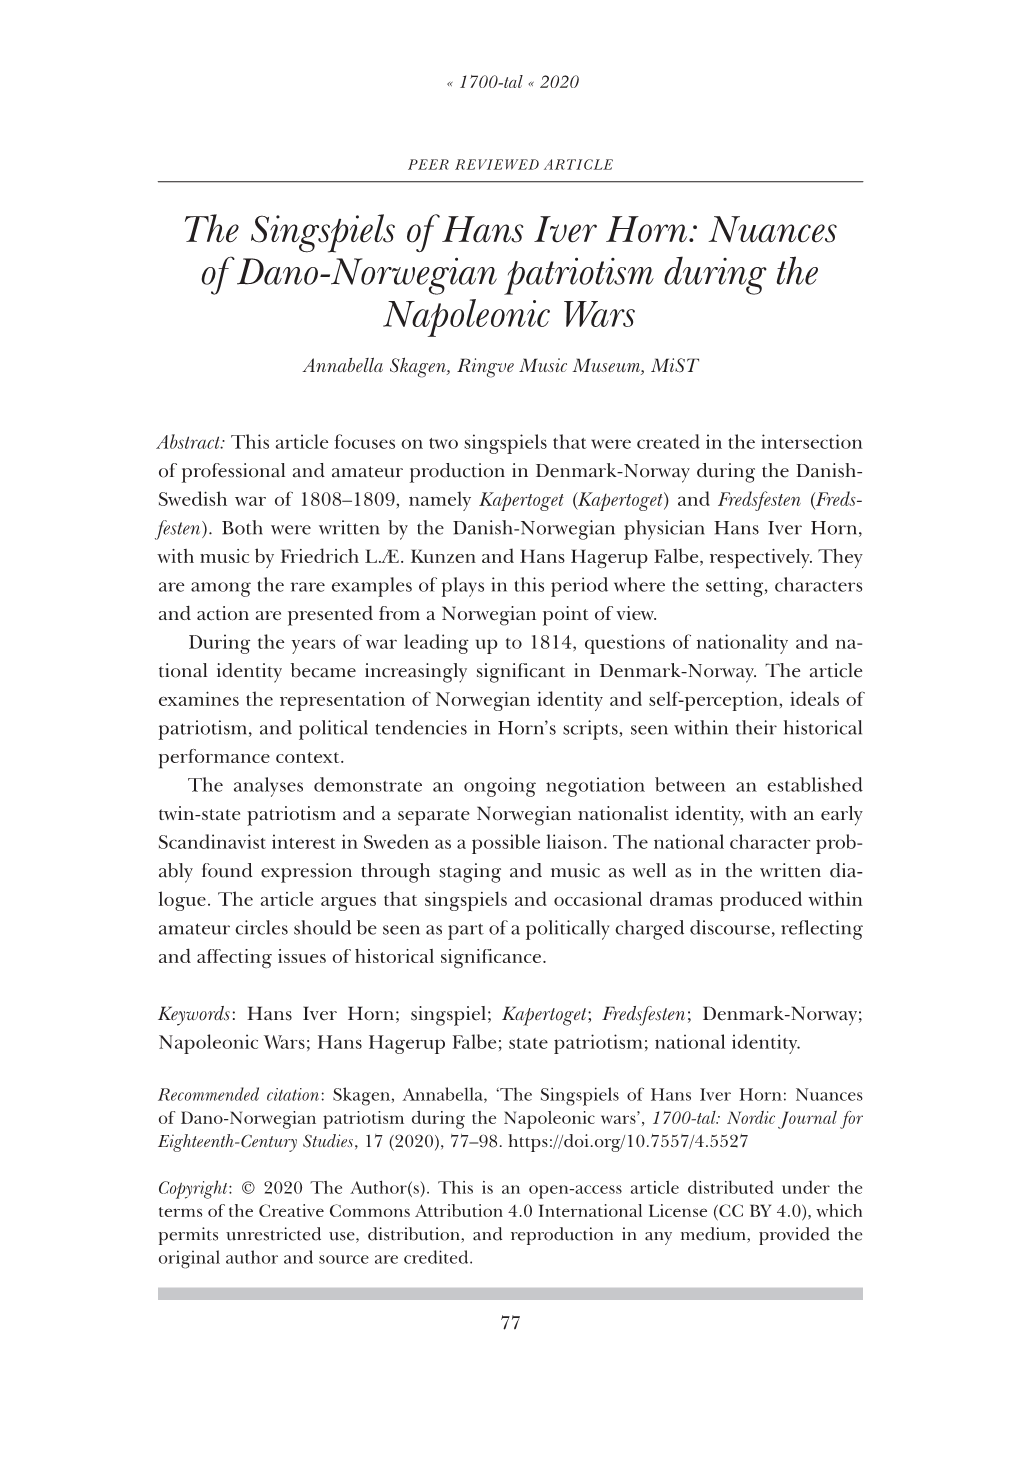 The Singspiels of Hans Iver Horn: Nuances of Dano-Norwegian Patriotism During the Napoleonic Wars